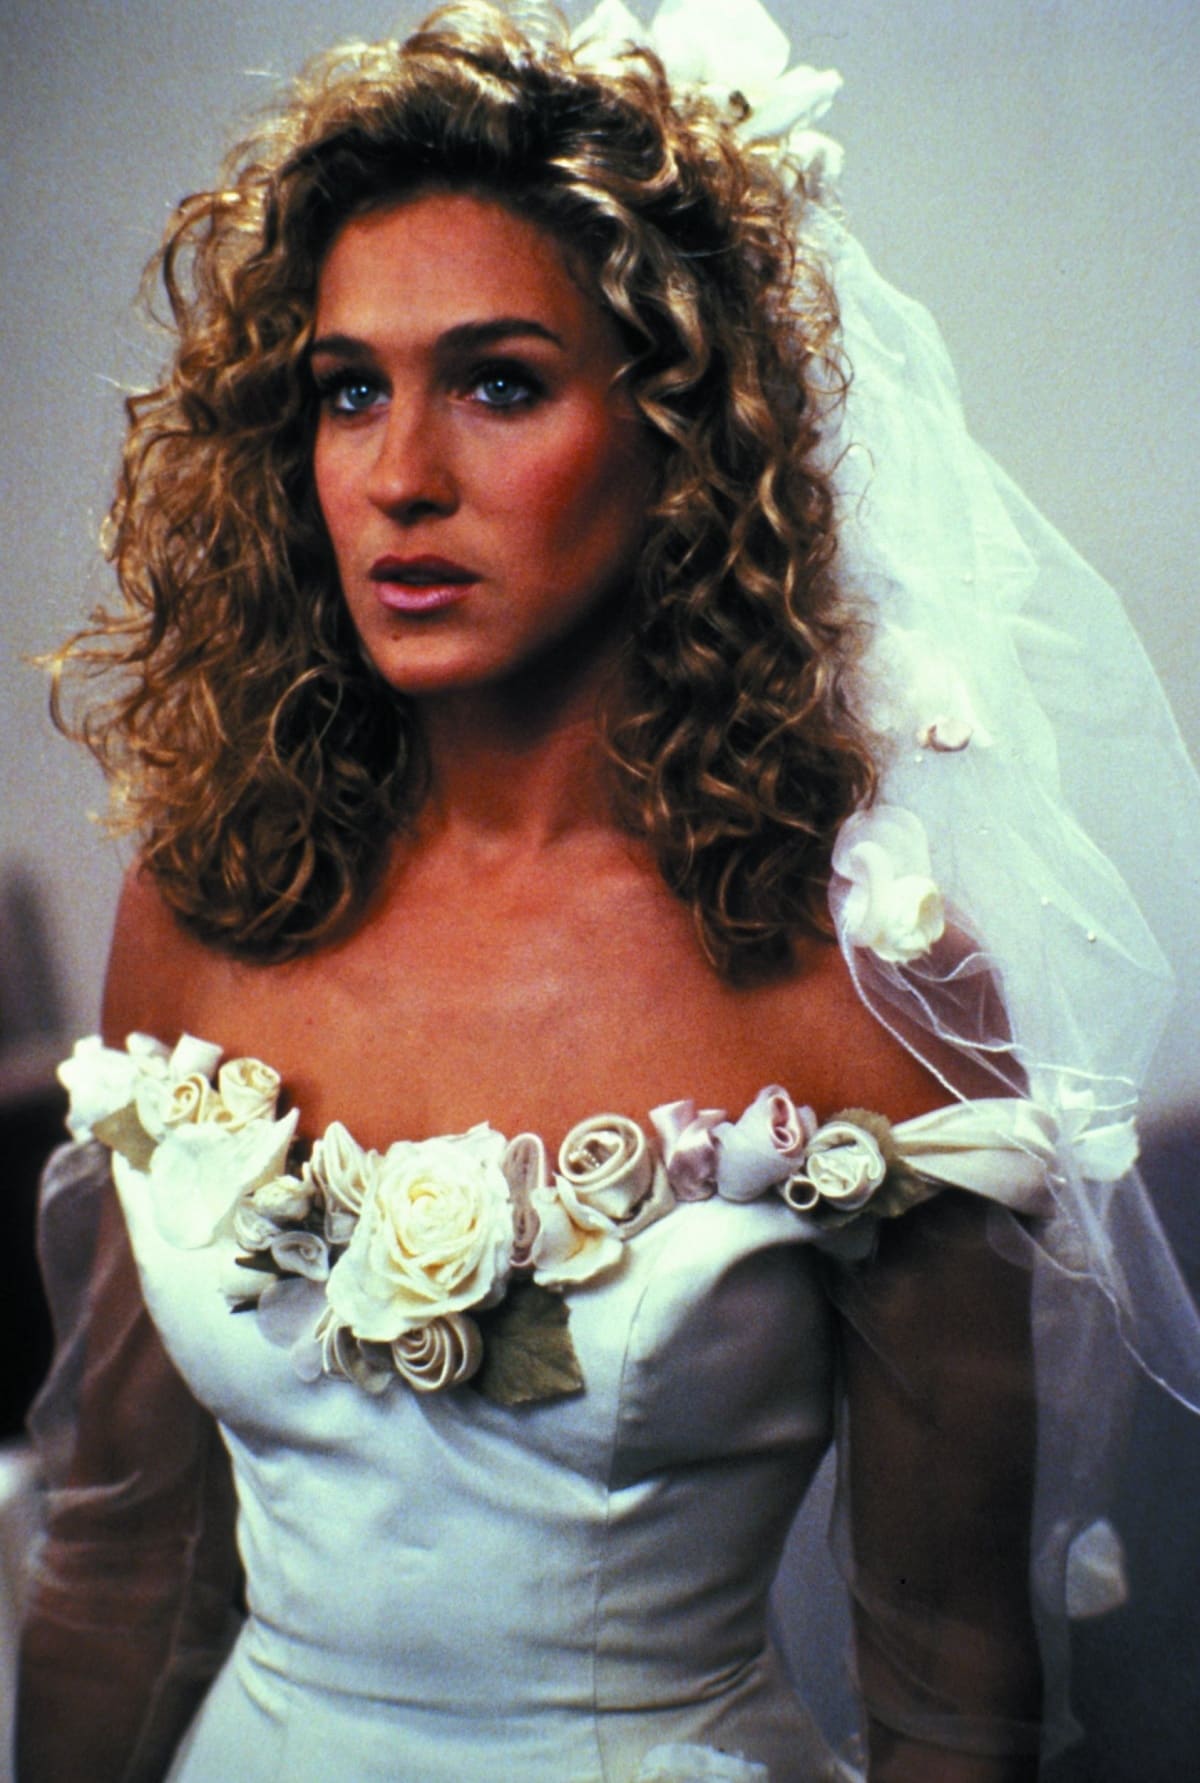 Sarah Jessica Parker as Betsy Nolan Singer / Donna Korman in the 1992 romantic comedy film Honeymoon in Vegas